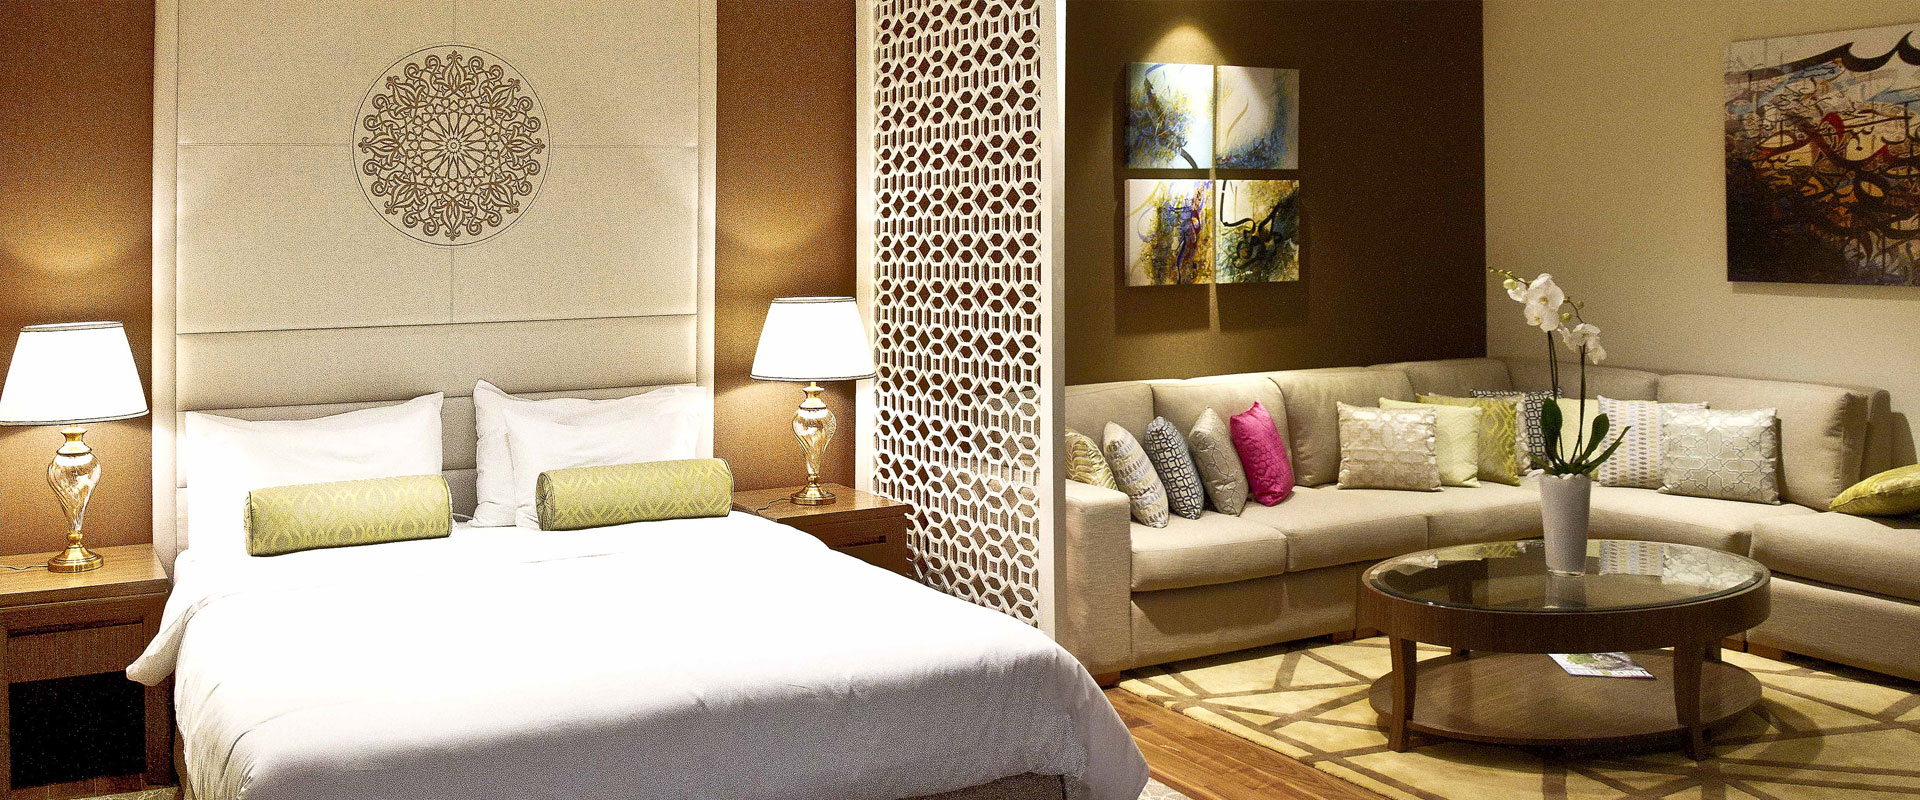 Terhab Sharjah Hotel